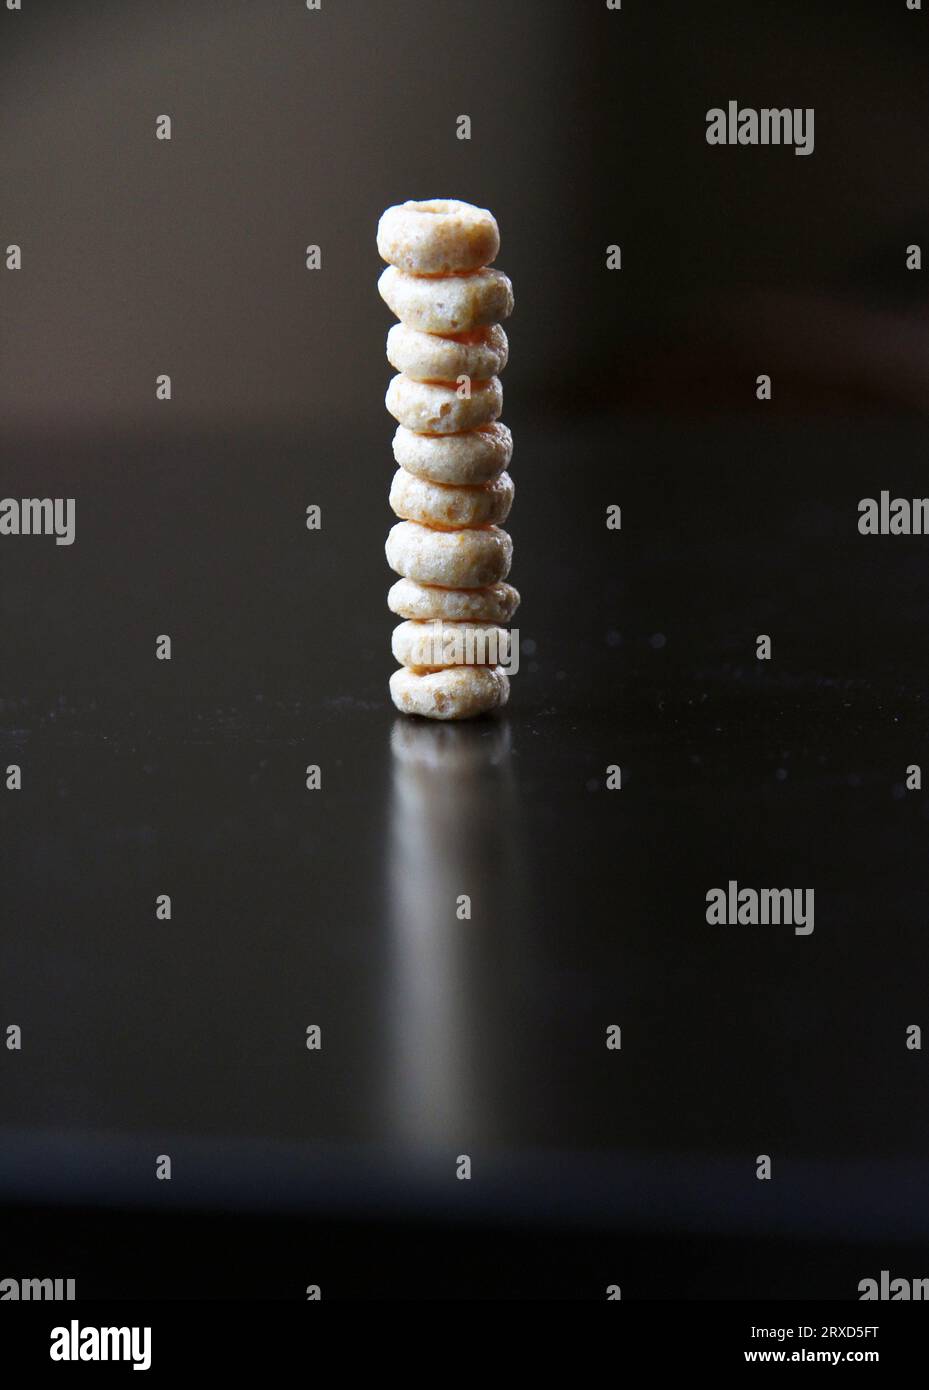 Cheerio Cereal Stacking Challenge Fun Activity Stock Photo